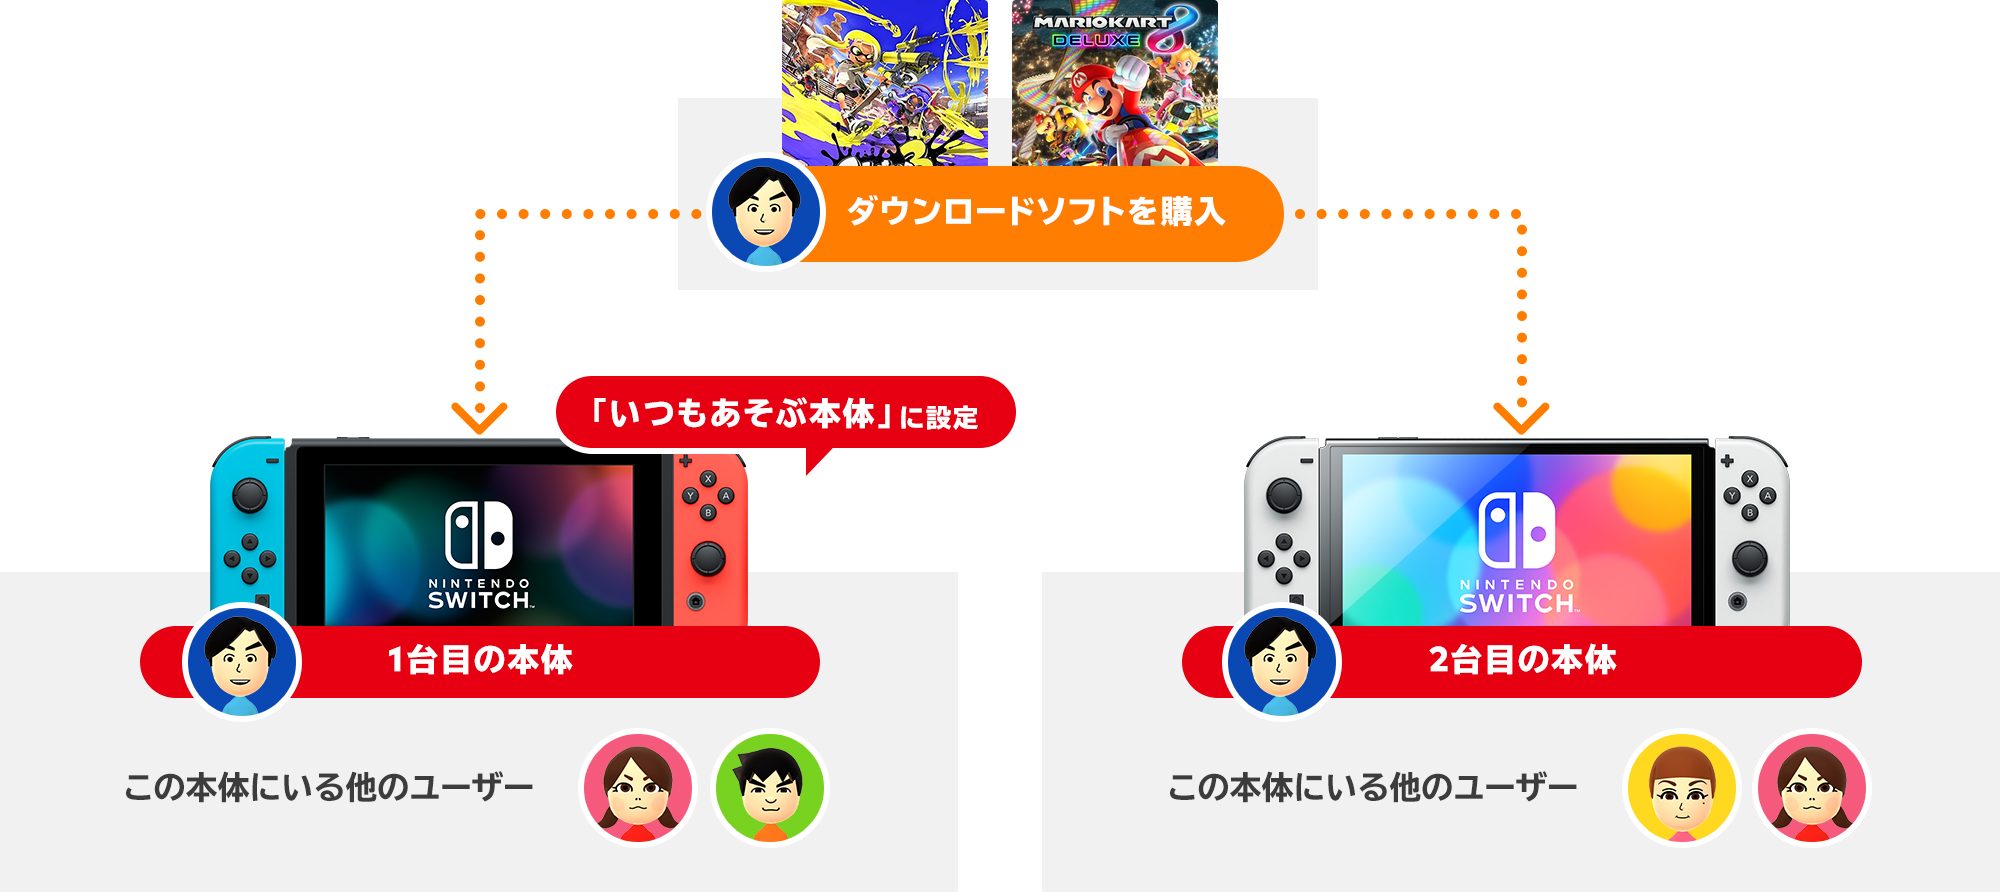 Nintendo Switch(有機ELモデル) ホワイト 2台